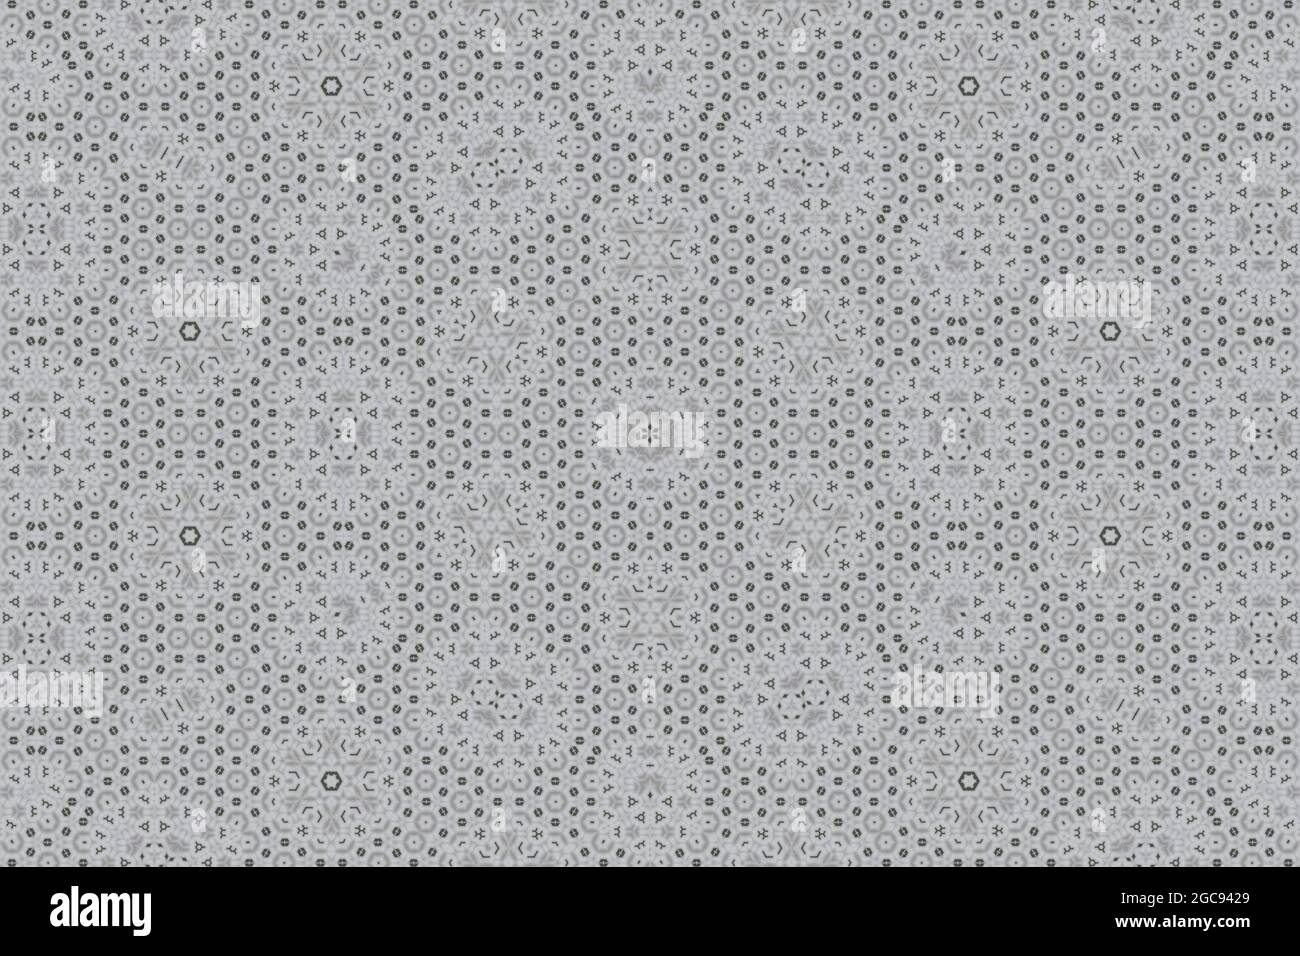 Ivory white kaleidoscope pattern. Complex geometric star and hexagonal mandala. Arabic style islamic patterns and motifs for wallpaper and tile art. Stock Photo